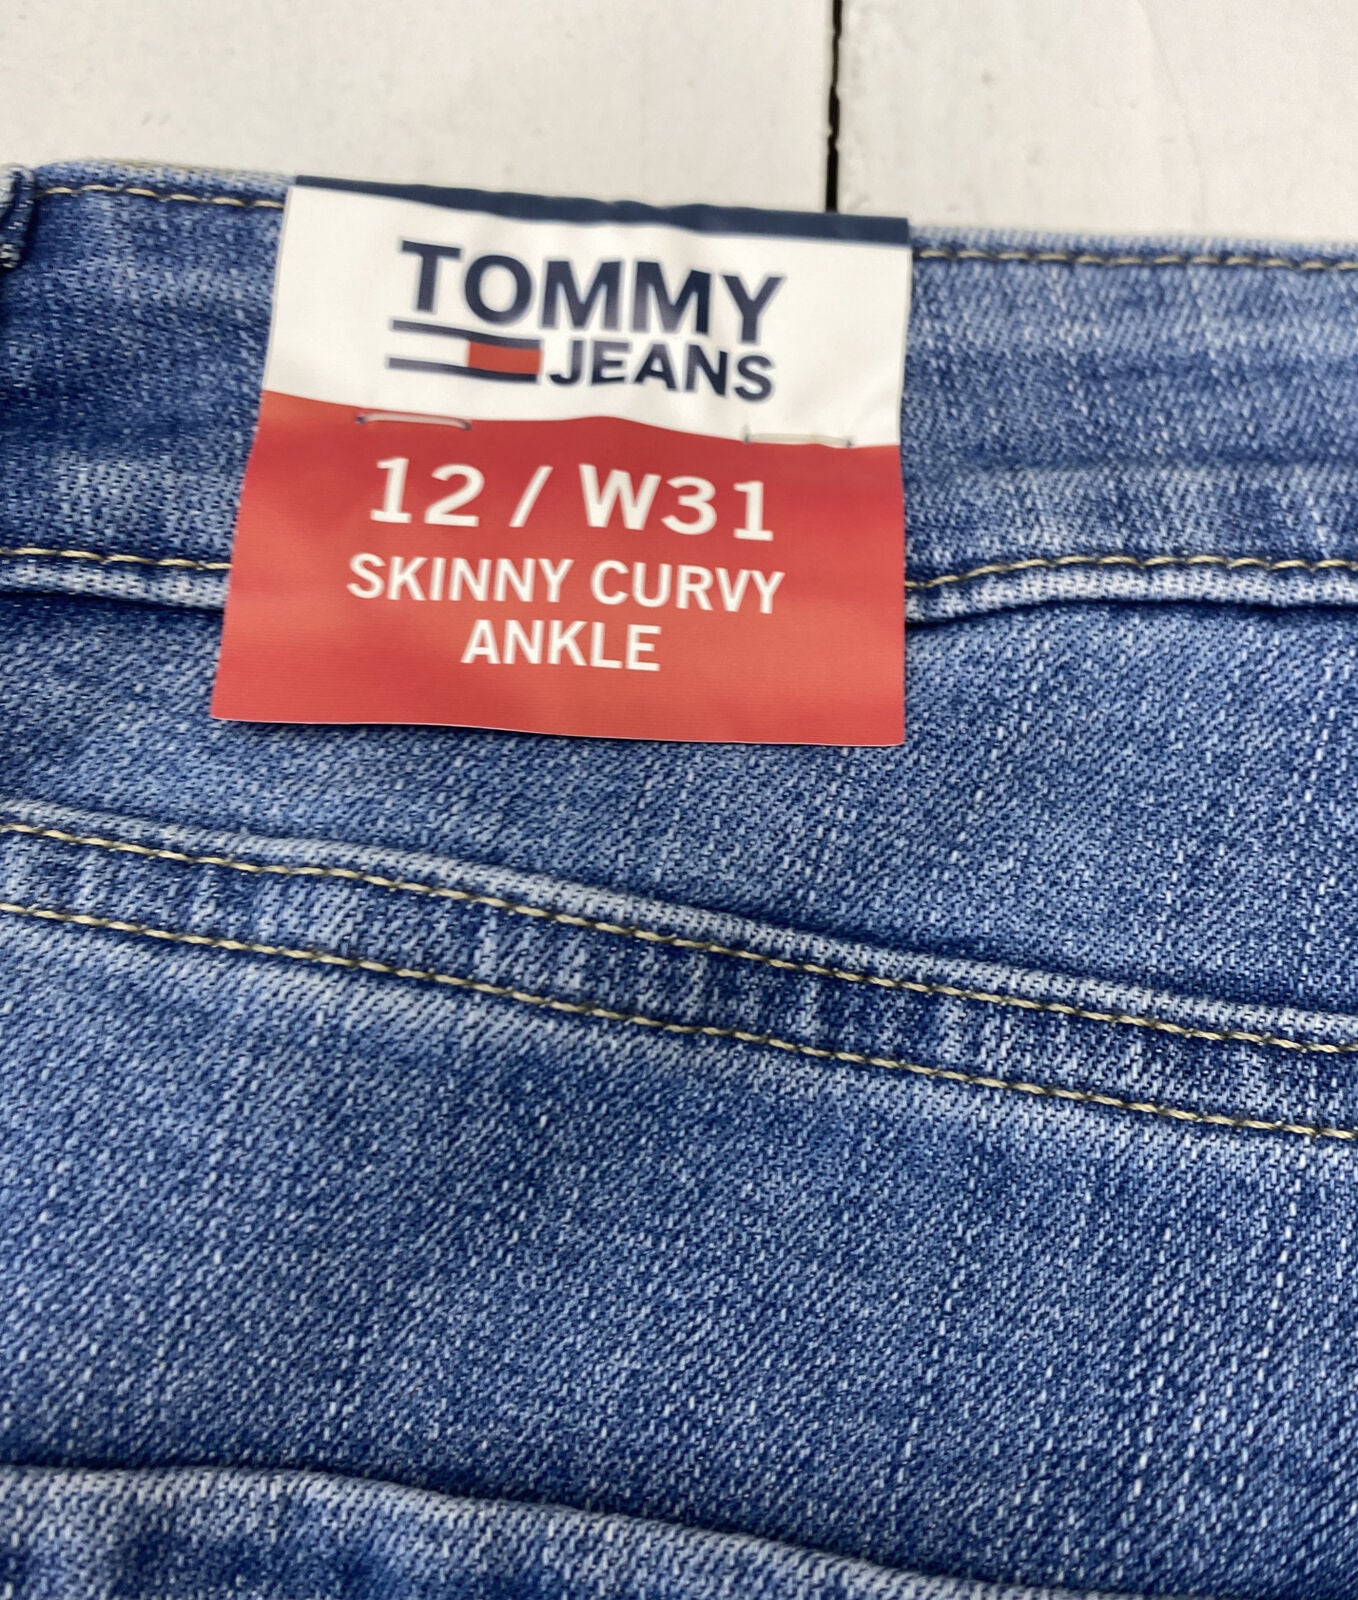 Tommy Hilfiger exchange Size New 12/31 Curvy - TOBKOFZC Jean beyond Ankle Skinny Womens